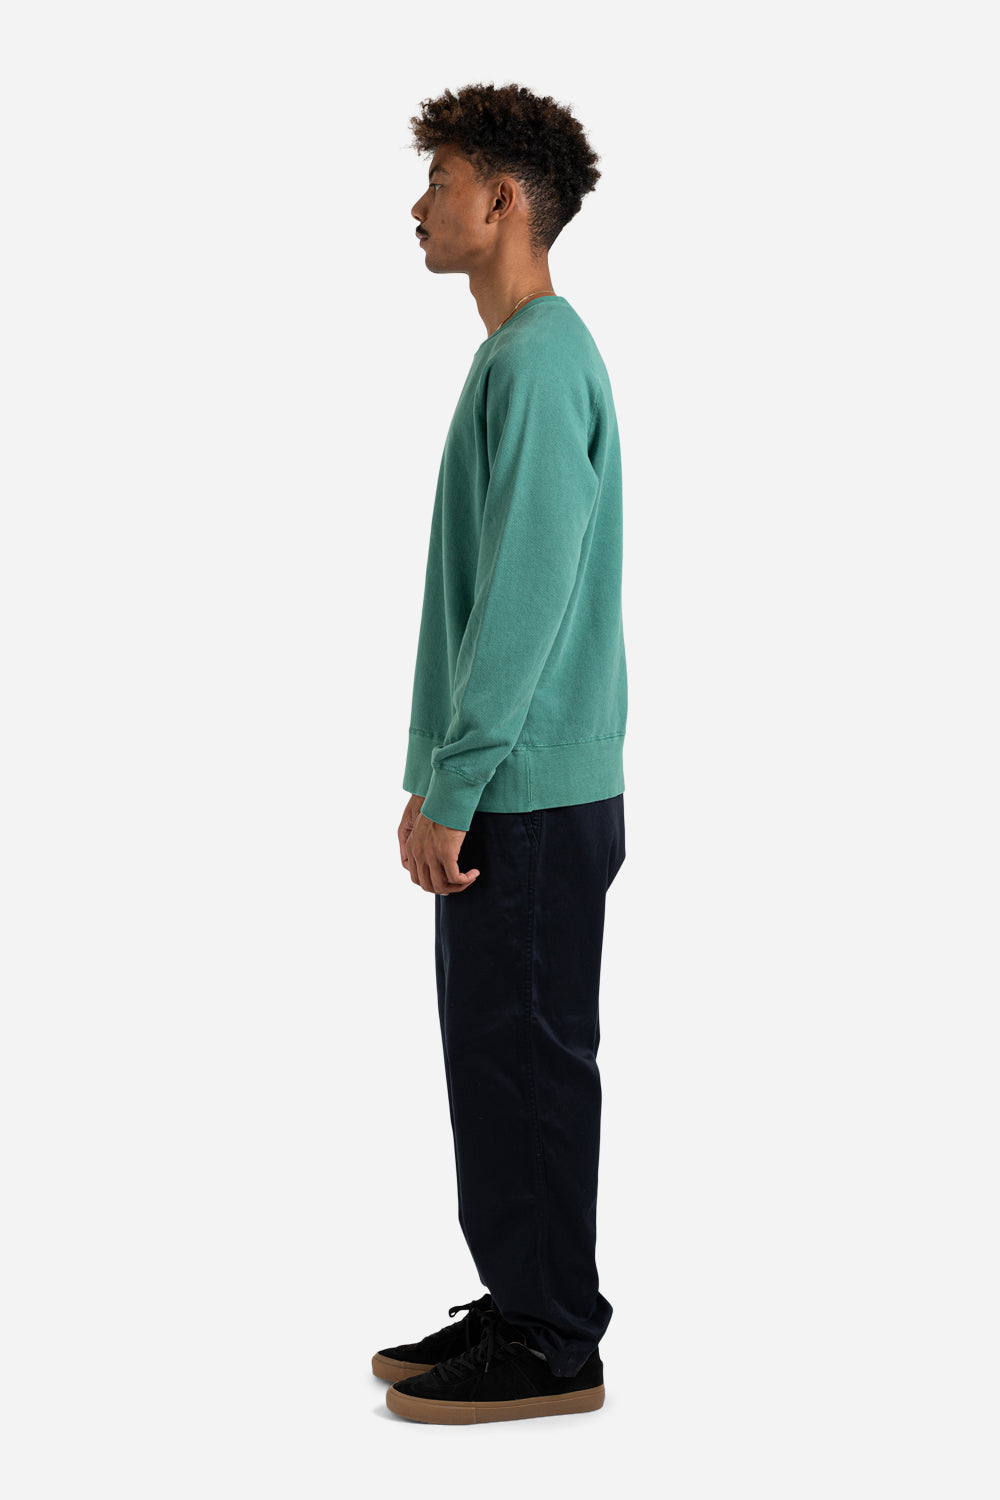 Freedom-Sweatshirt-Crewneck-8oz-Pigment-Evergreen